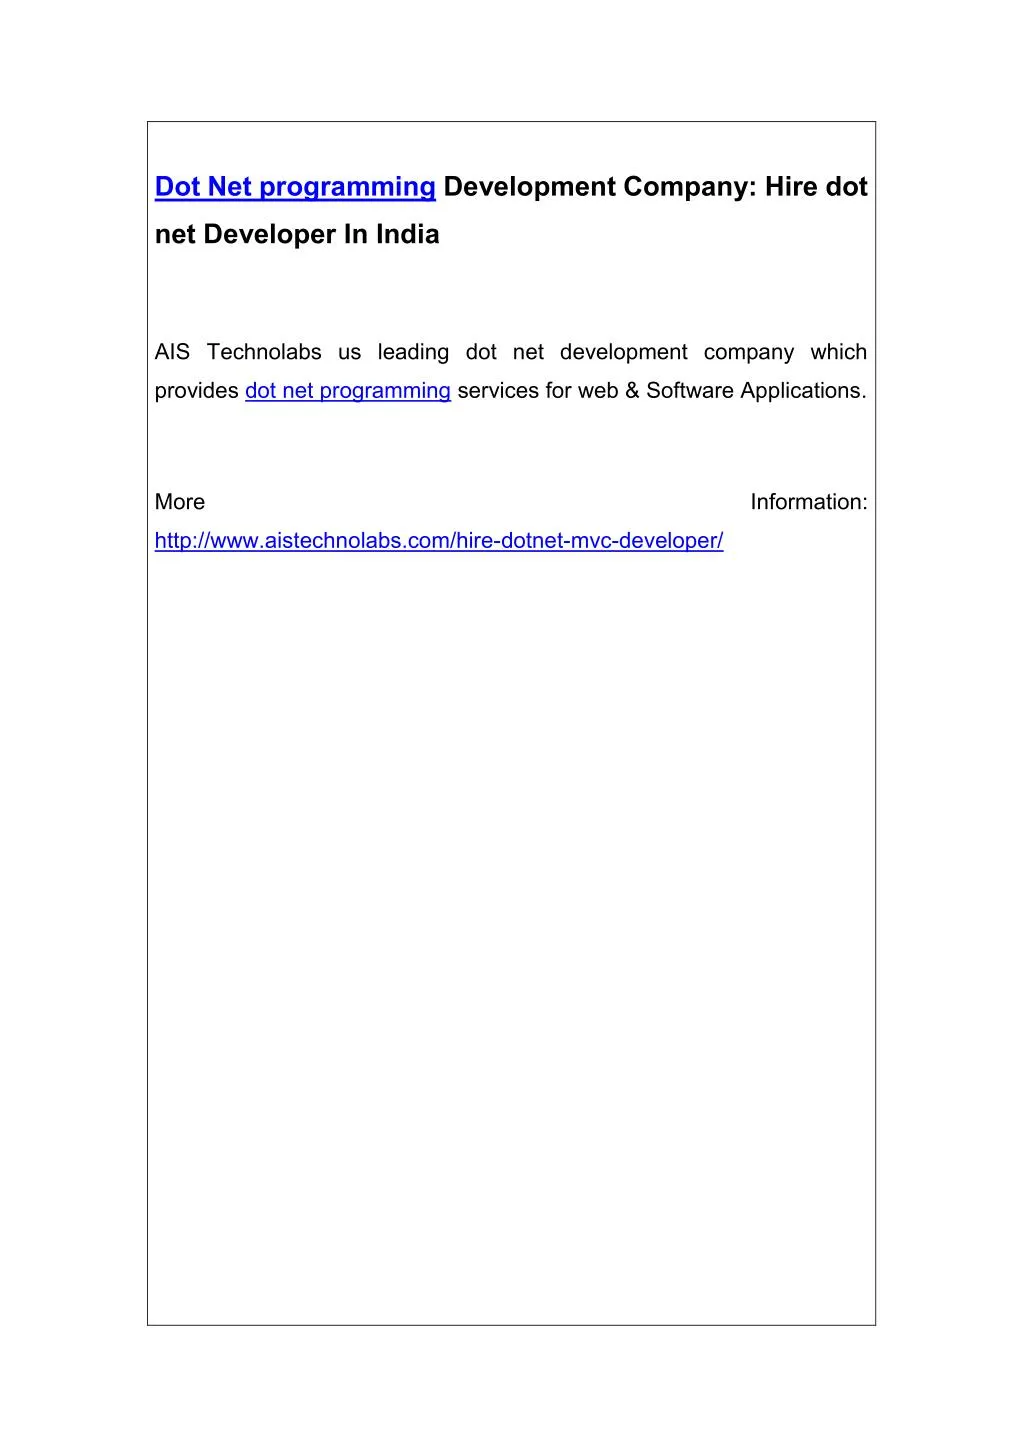 dot net programming development company hire dot n.